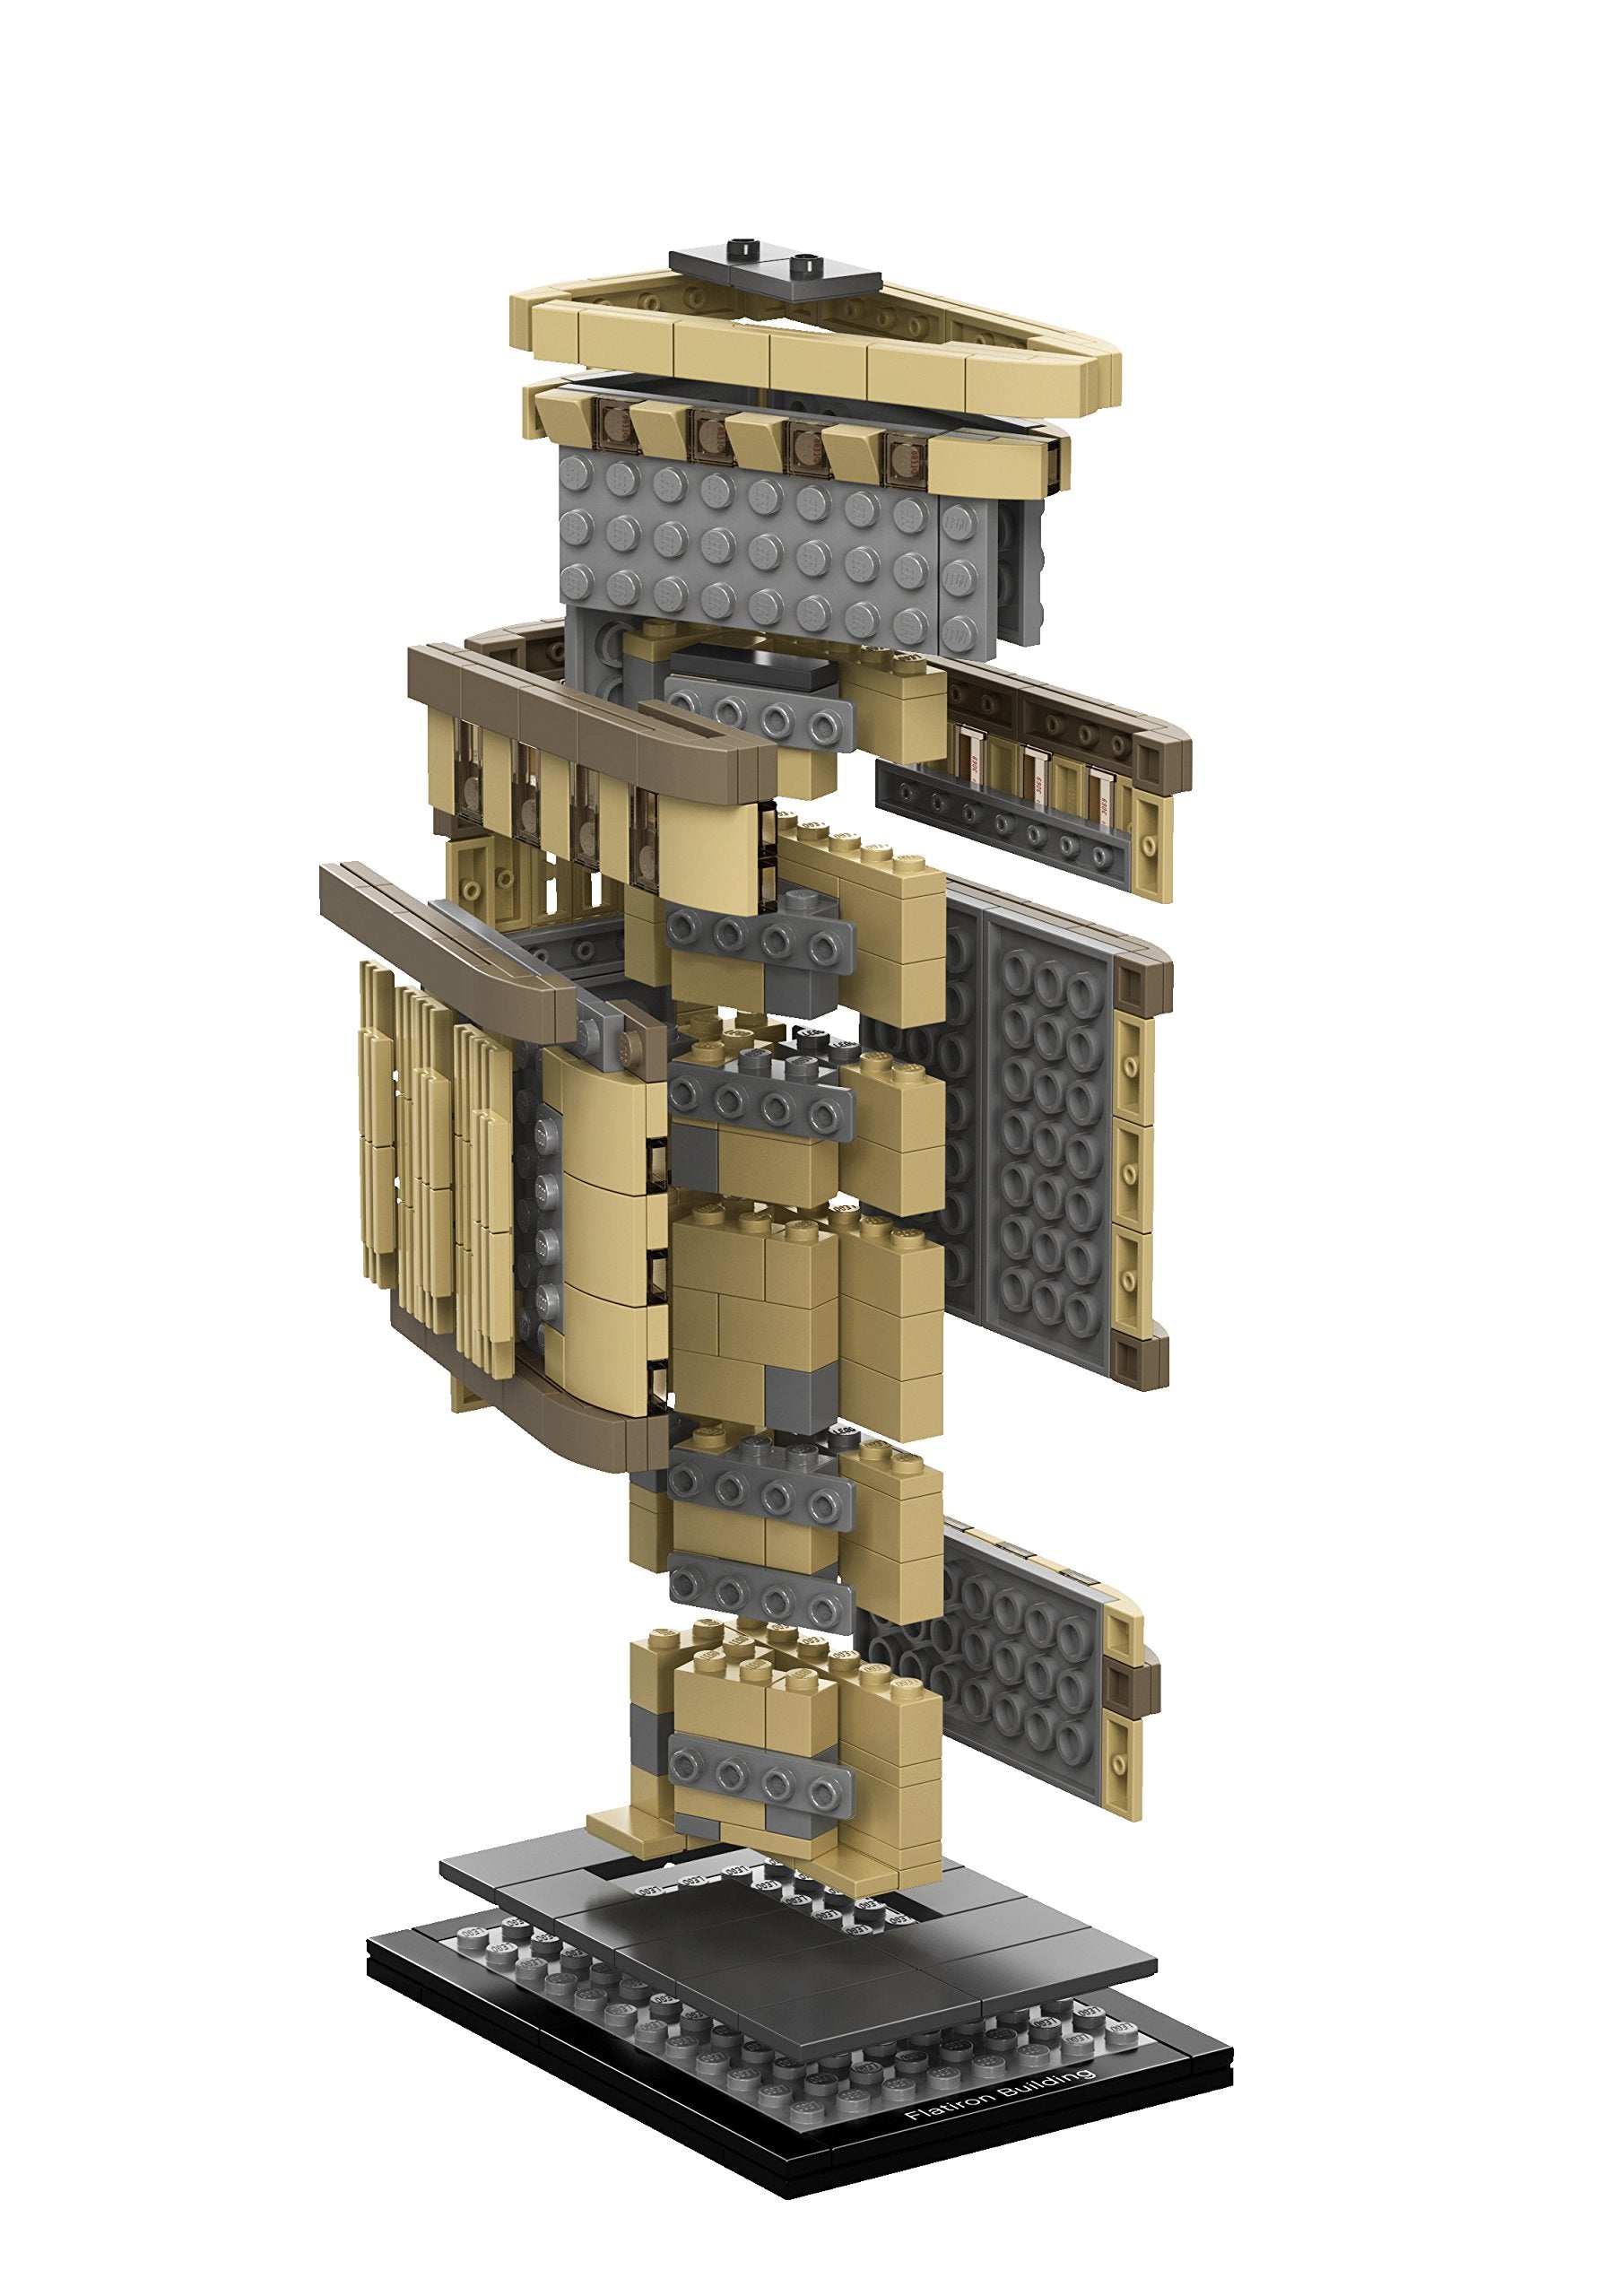 LEGO Architecture Flatiron Building NYC 21023 Building Kit (471 pcs)